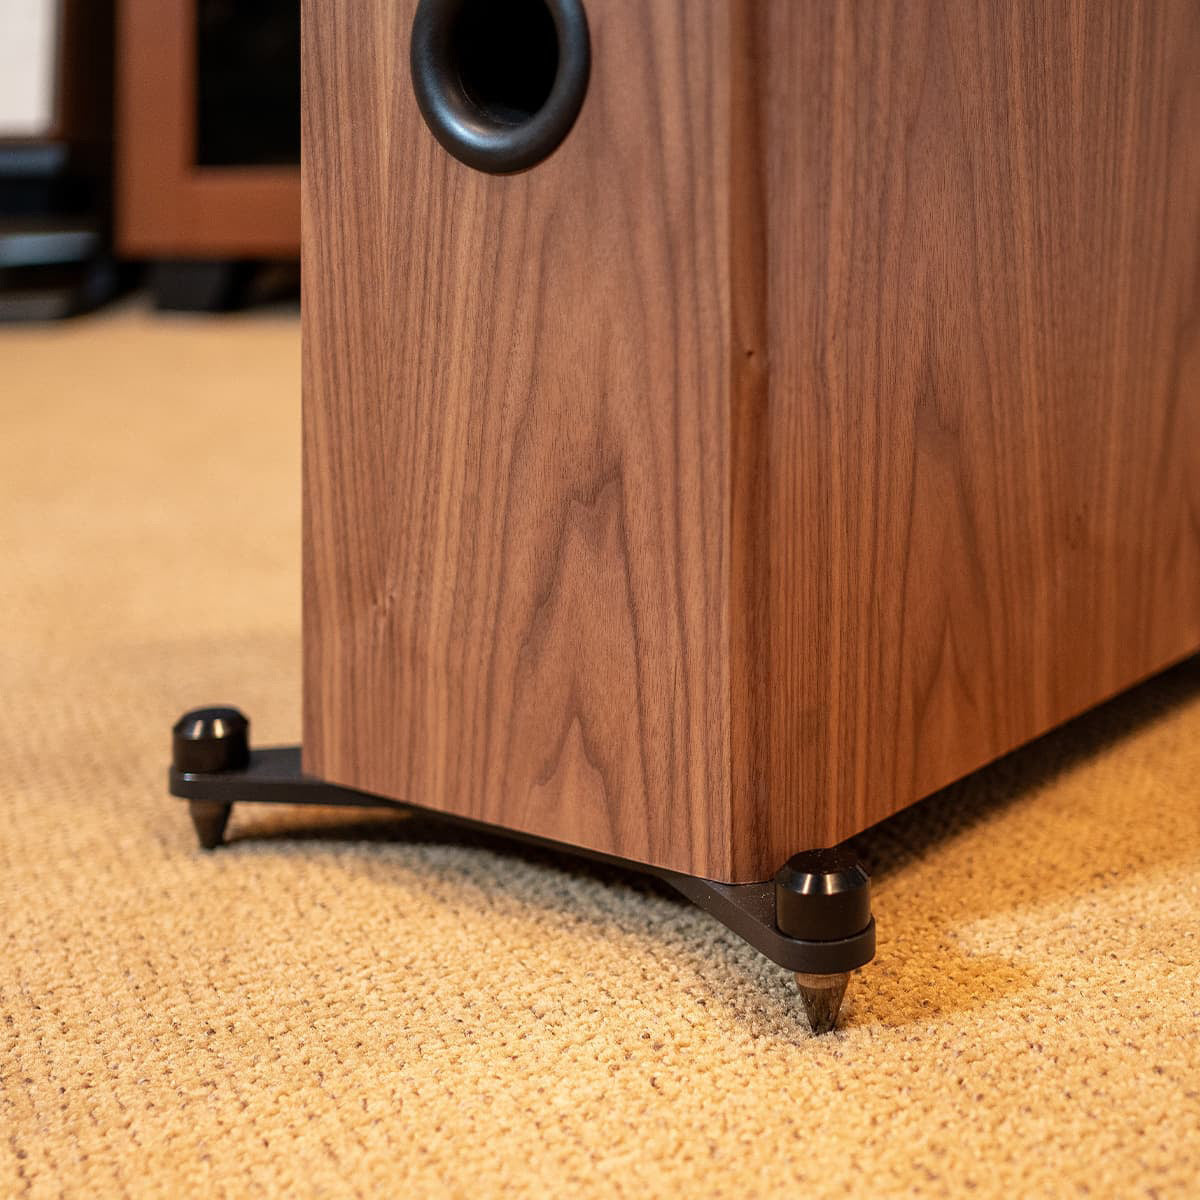 KLH Kendall 2F 3-Way Floorstanding Speaker - Each (English Walnut)